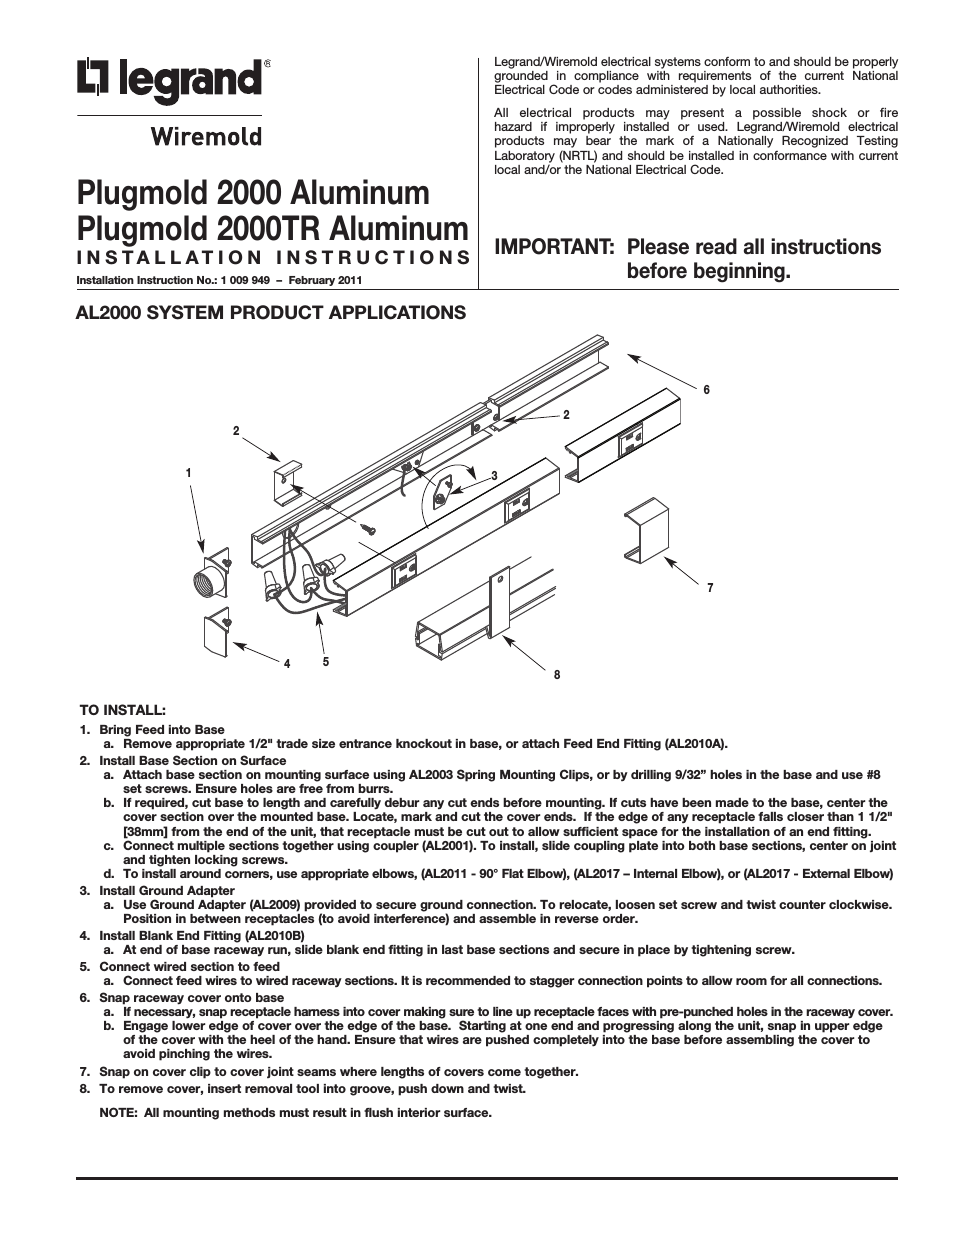 2000 Series Aluminum Plugmold Multioutlet System